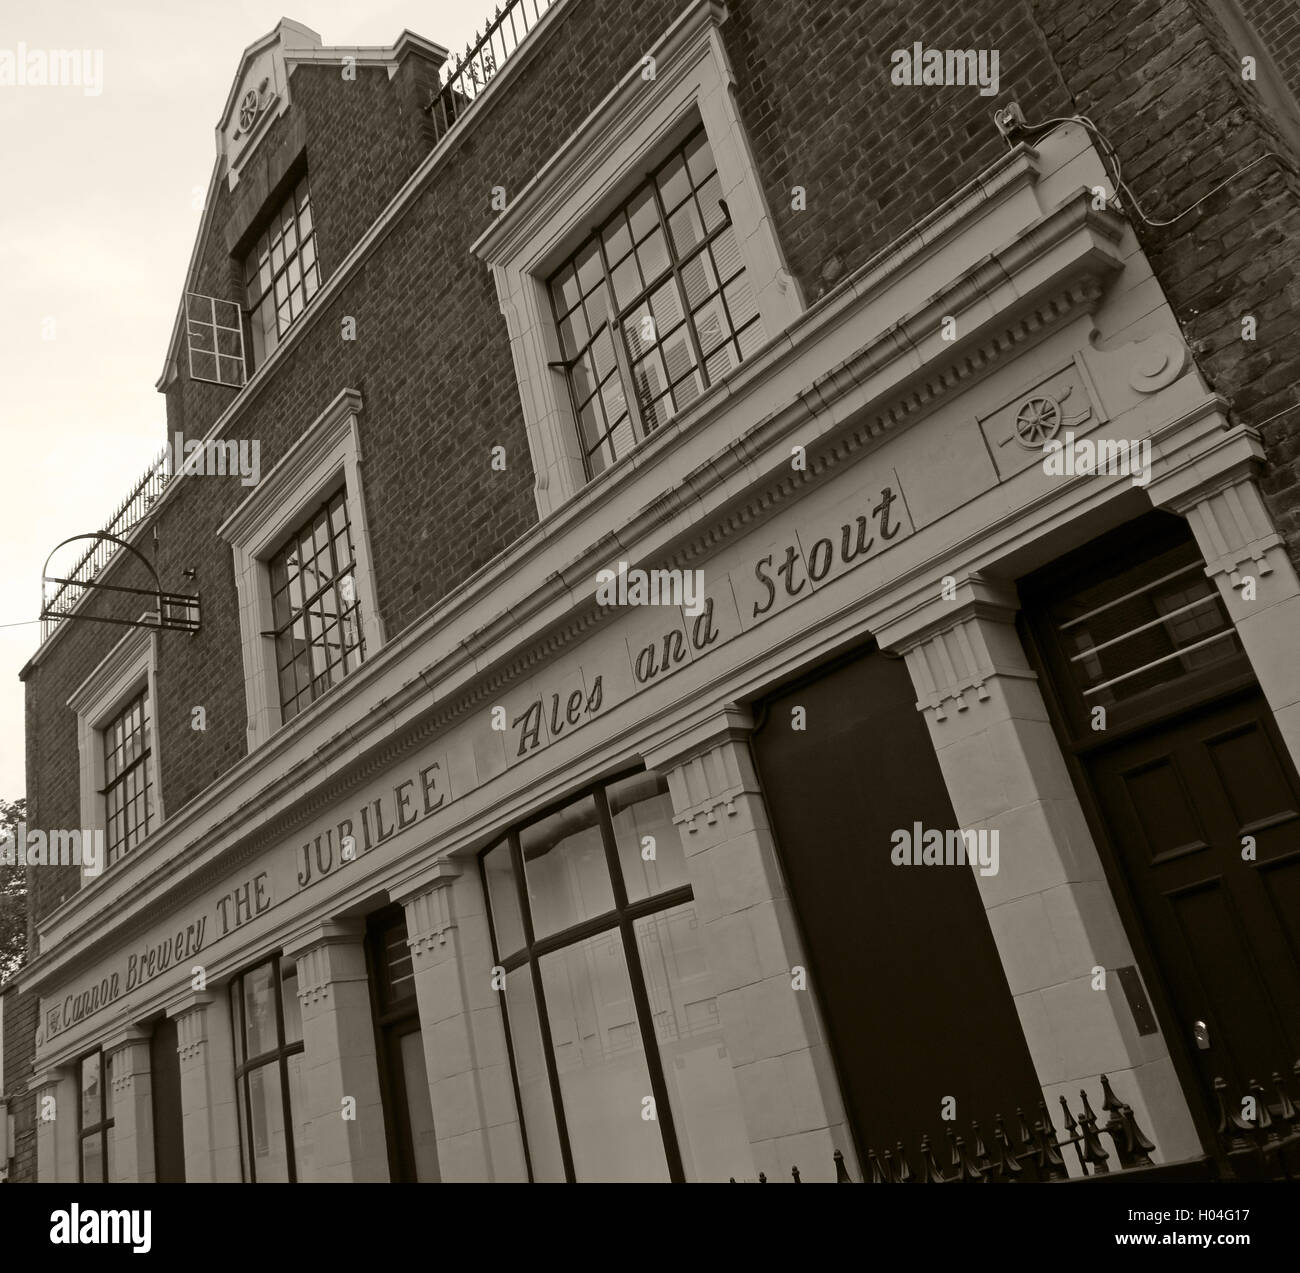 Die Jubilee Pub, Ales & Stout bauen, Somers Town, Euston, Camden, London Stockfoto